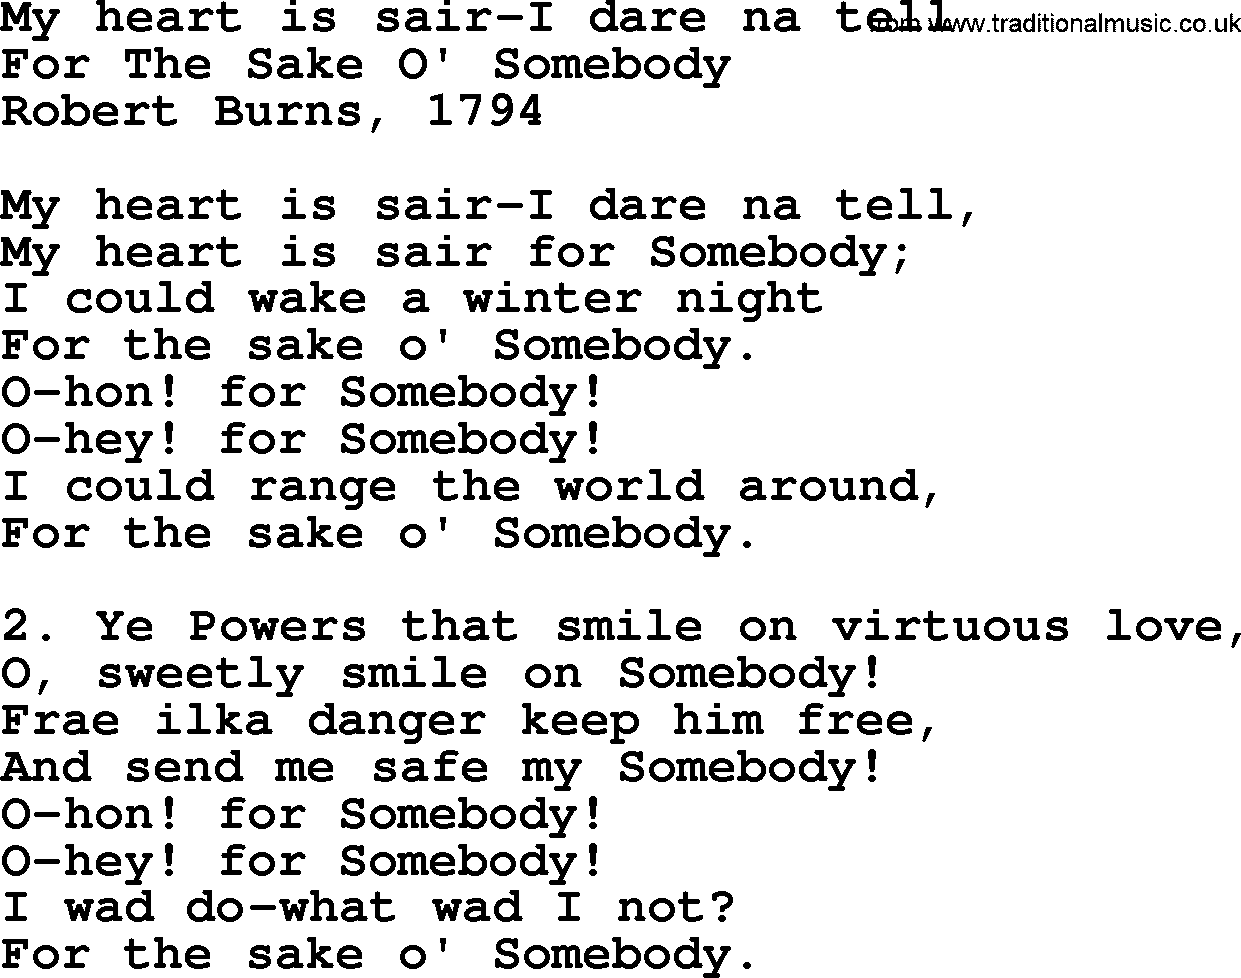 Robert Burns Songs & Lyrics: My Heart Is Sair-i Dare Na Tell